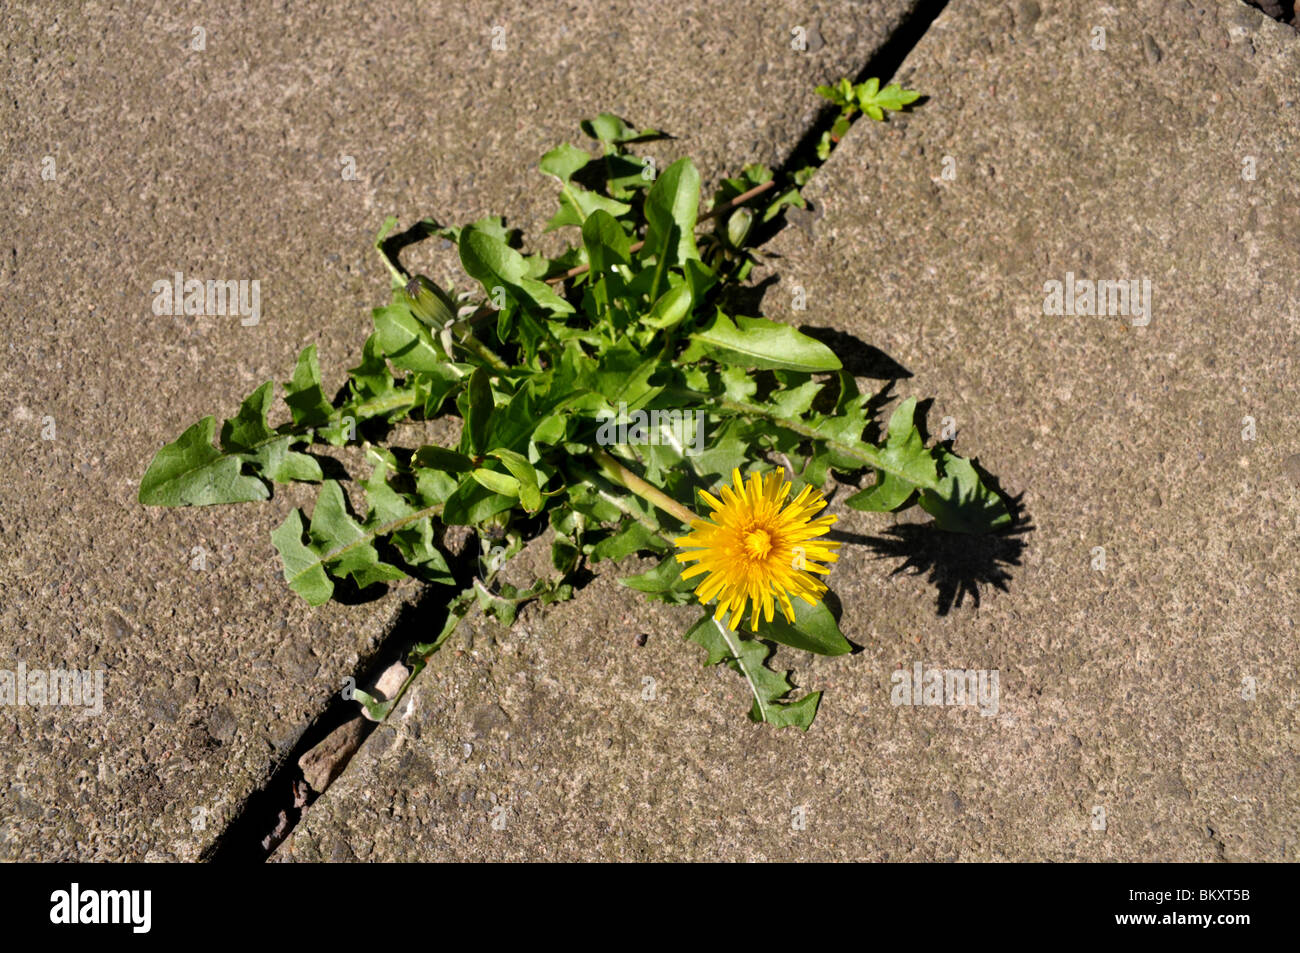 A flowering dandelion grows between the joins of concrete garden tiles / slabs. Stock Photo